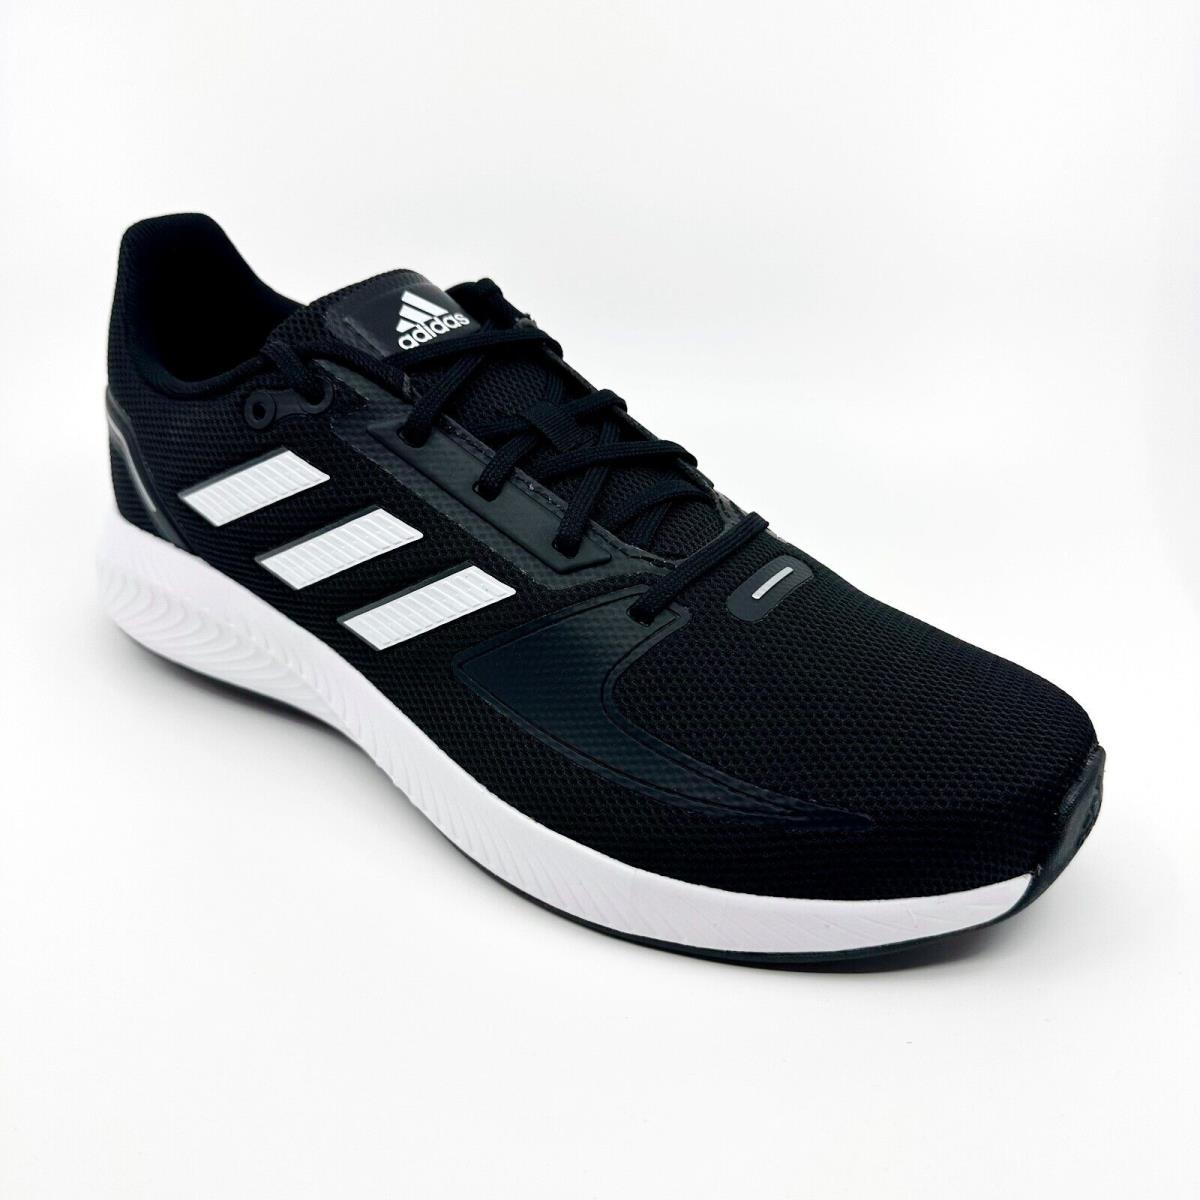 Adidas shoes Runfalcon - Black 0